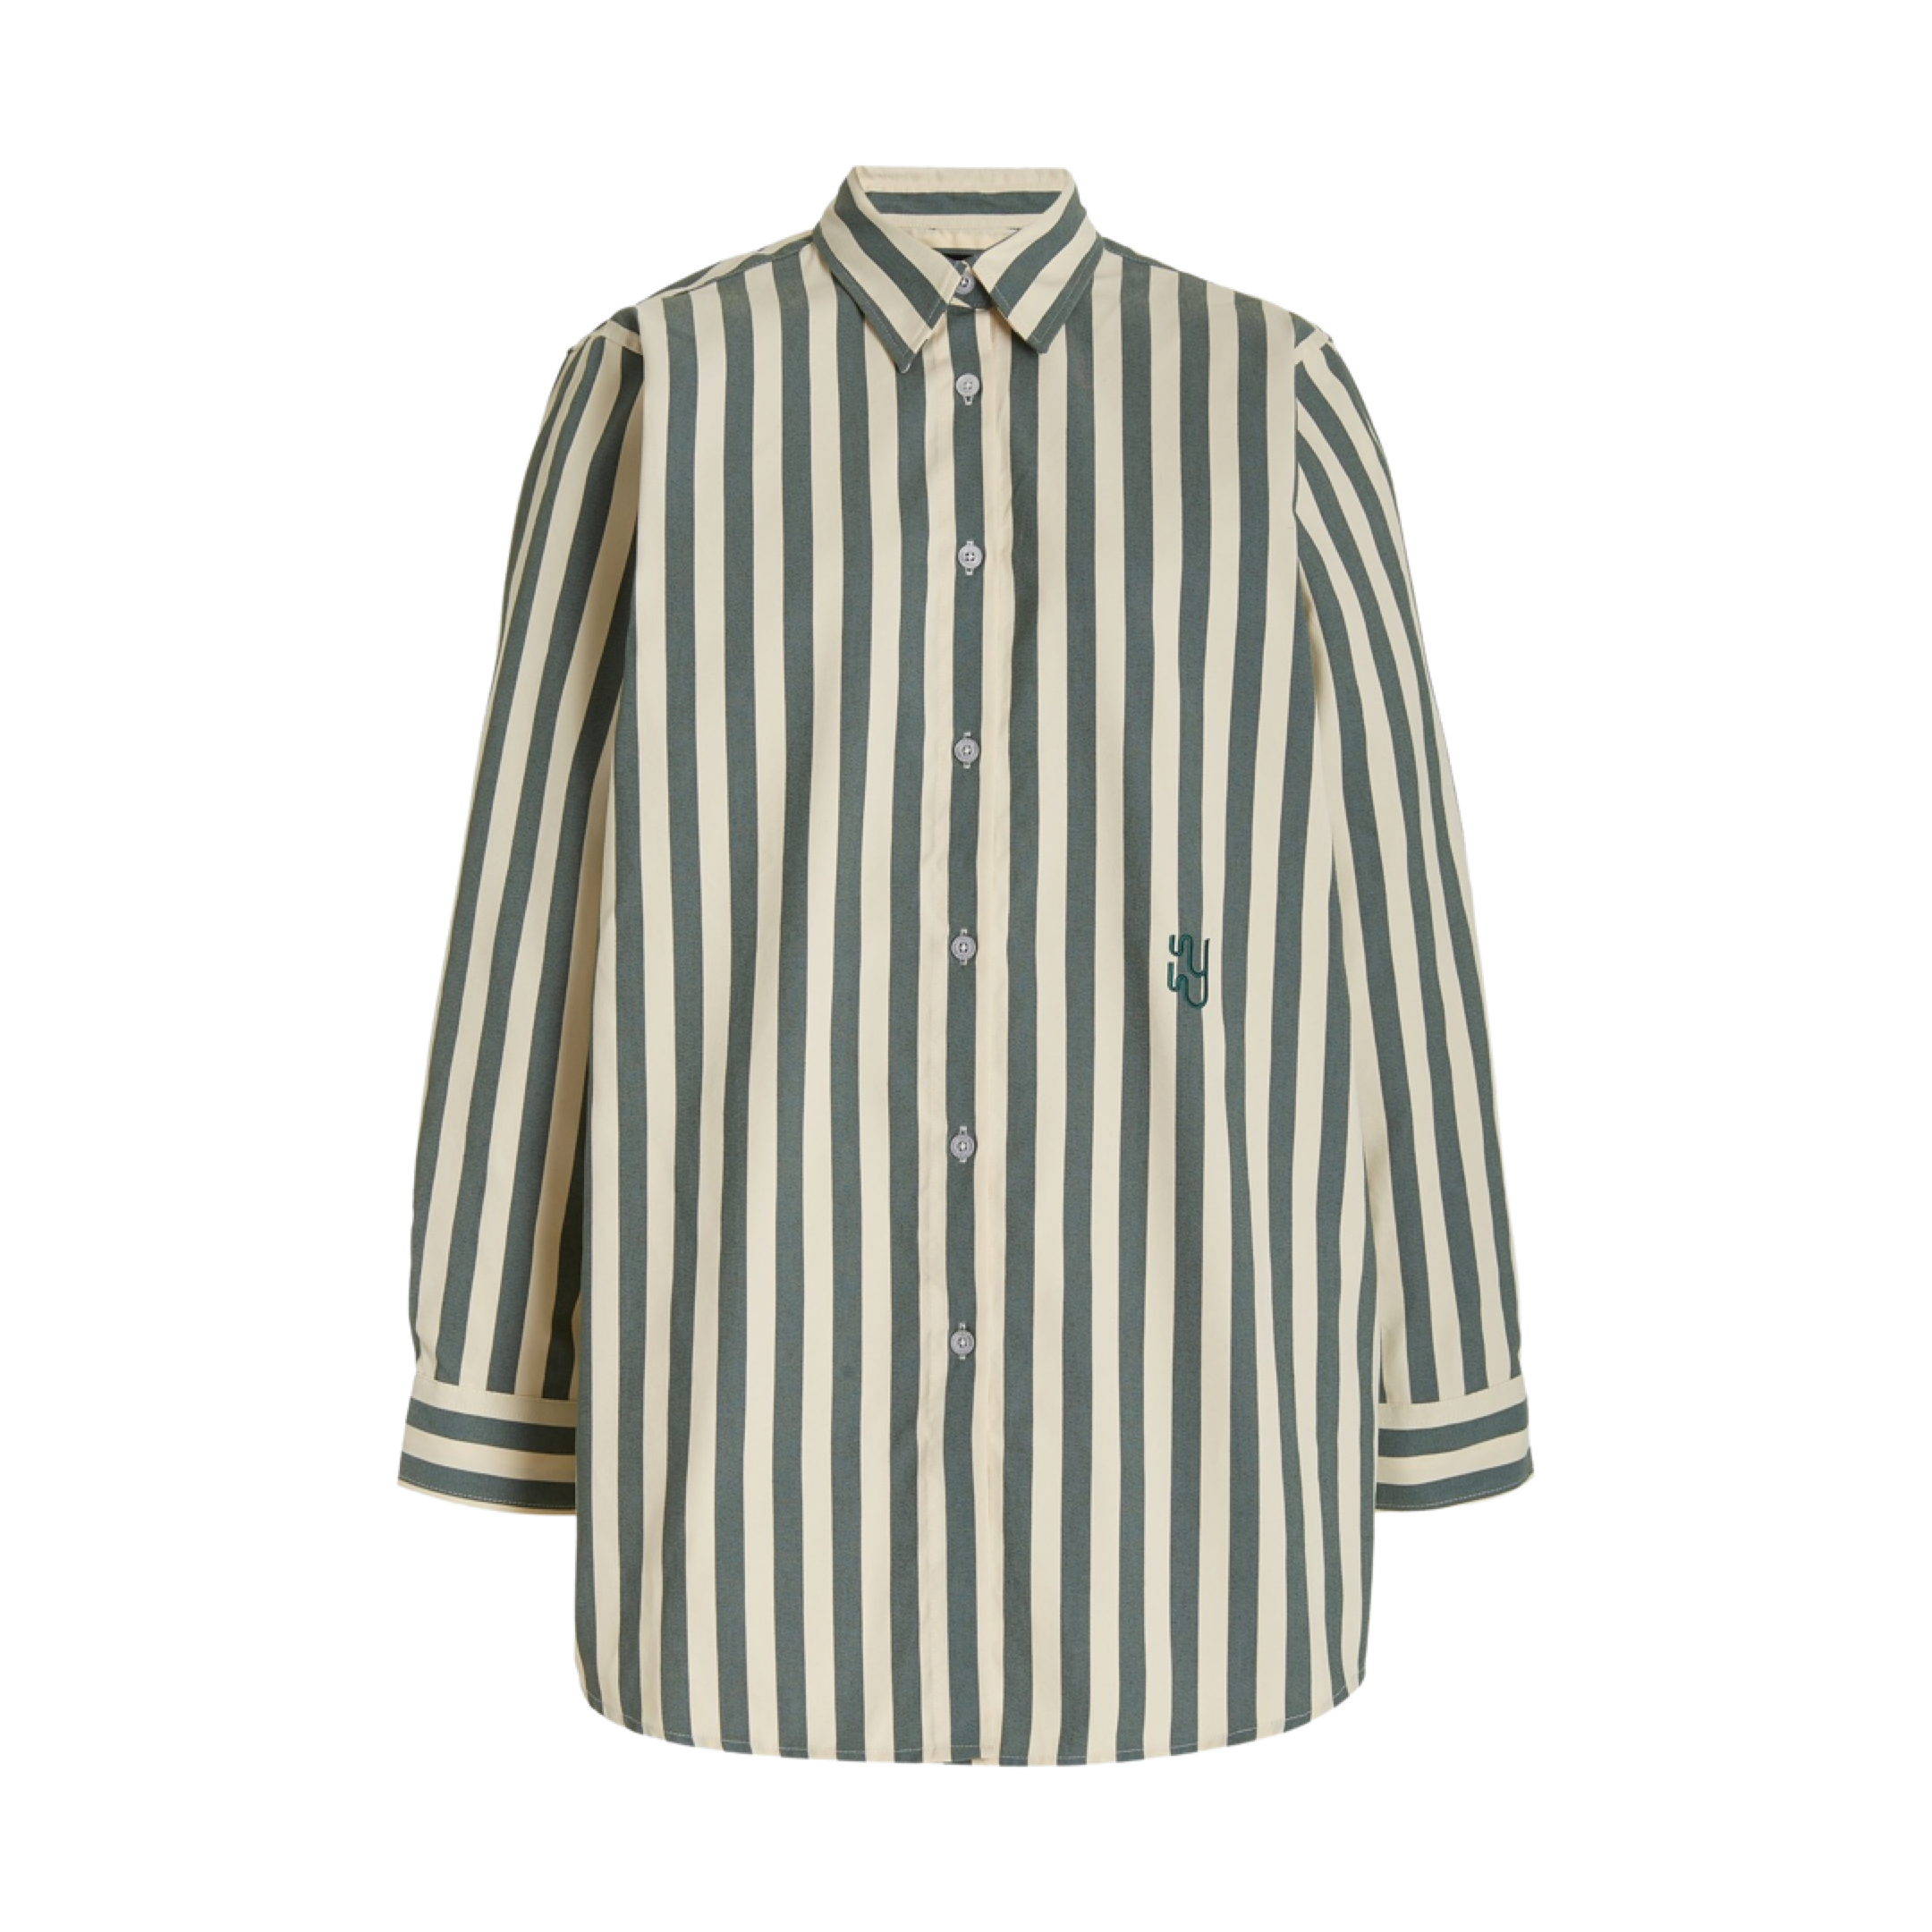 Buoy Striped Shirt